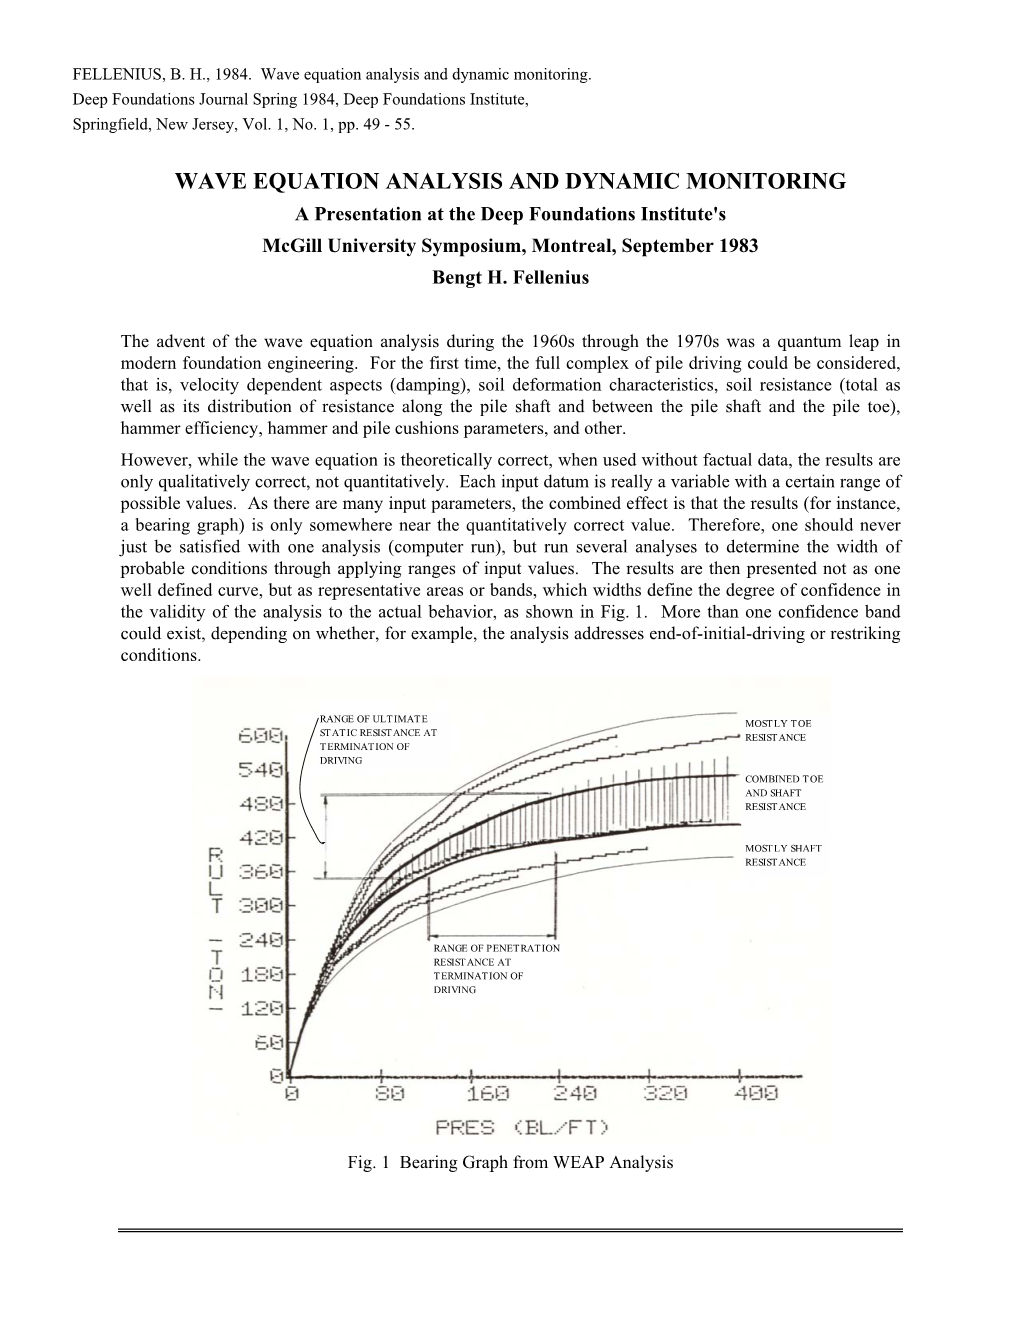 Wave Equation Analysis and Dynamic Monitoring